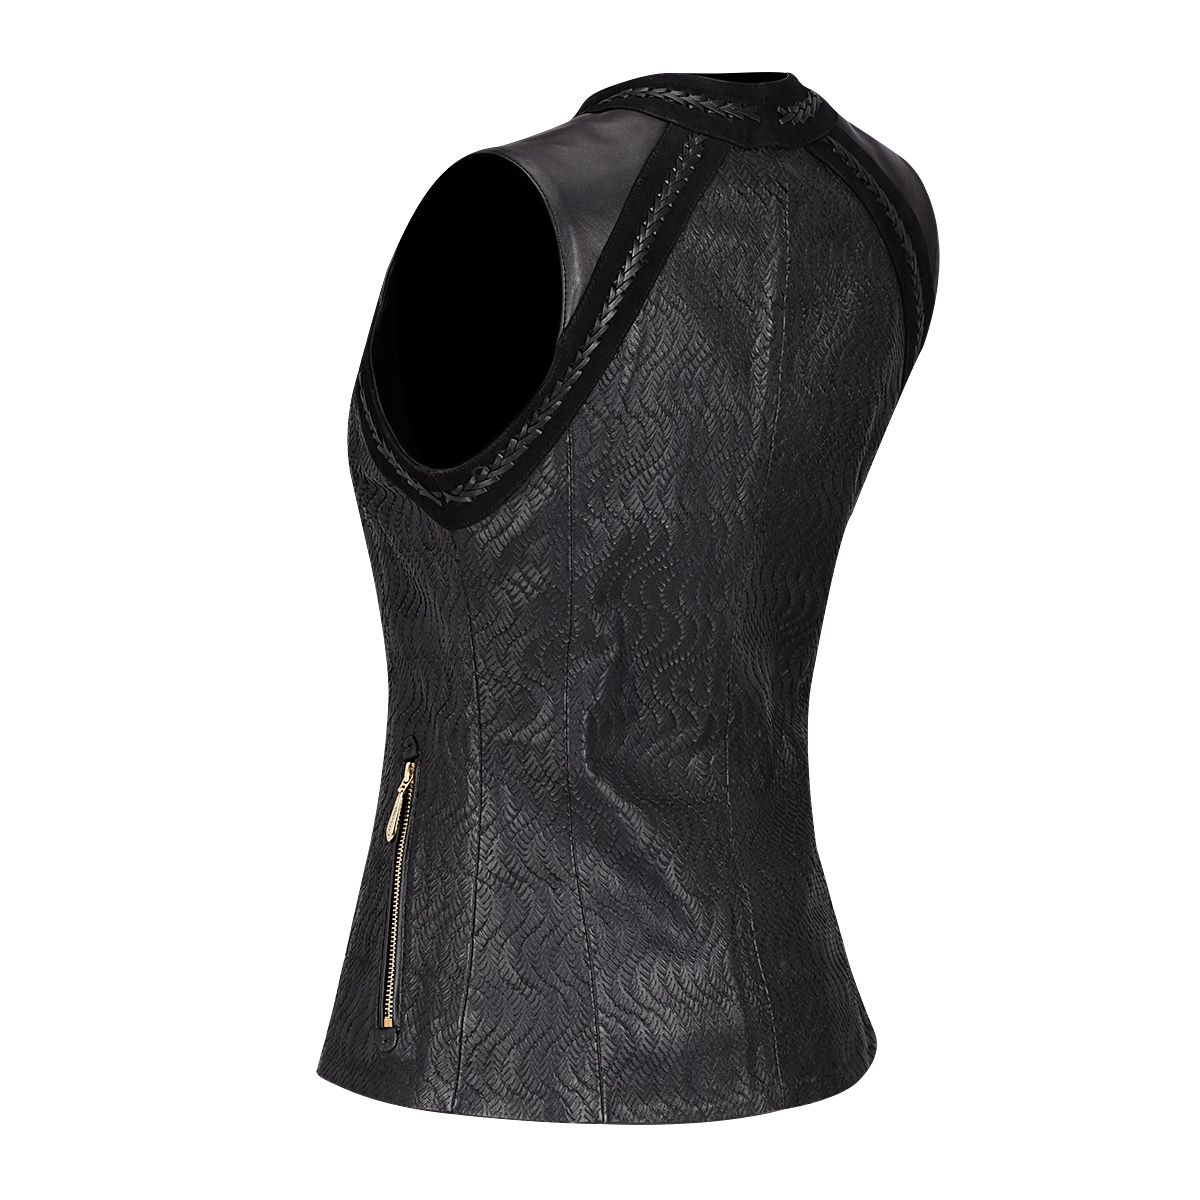 M283BOA - Cuadra black dress fashion cowhide leather vest for women-Kuet.us